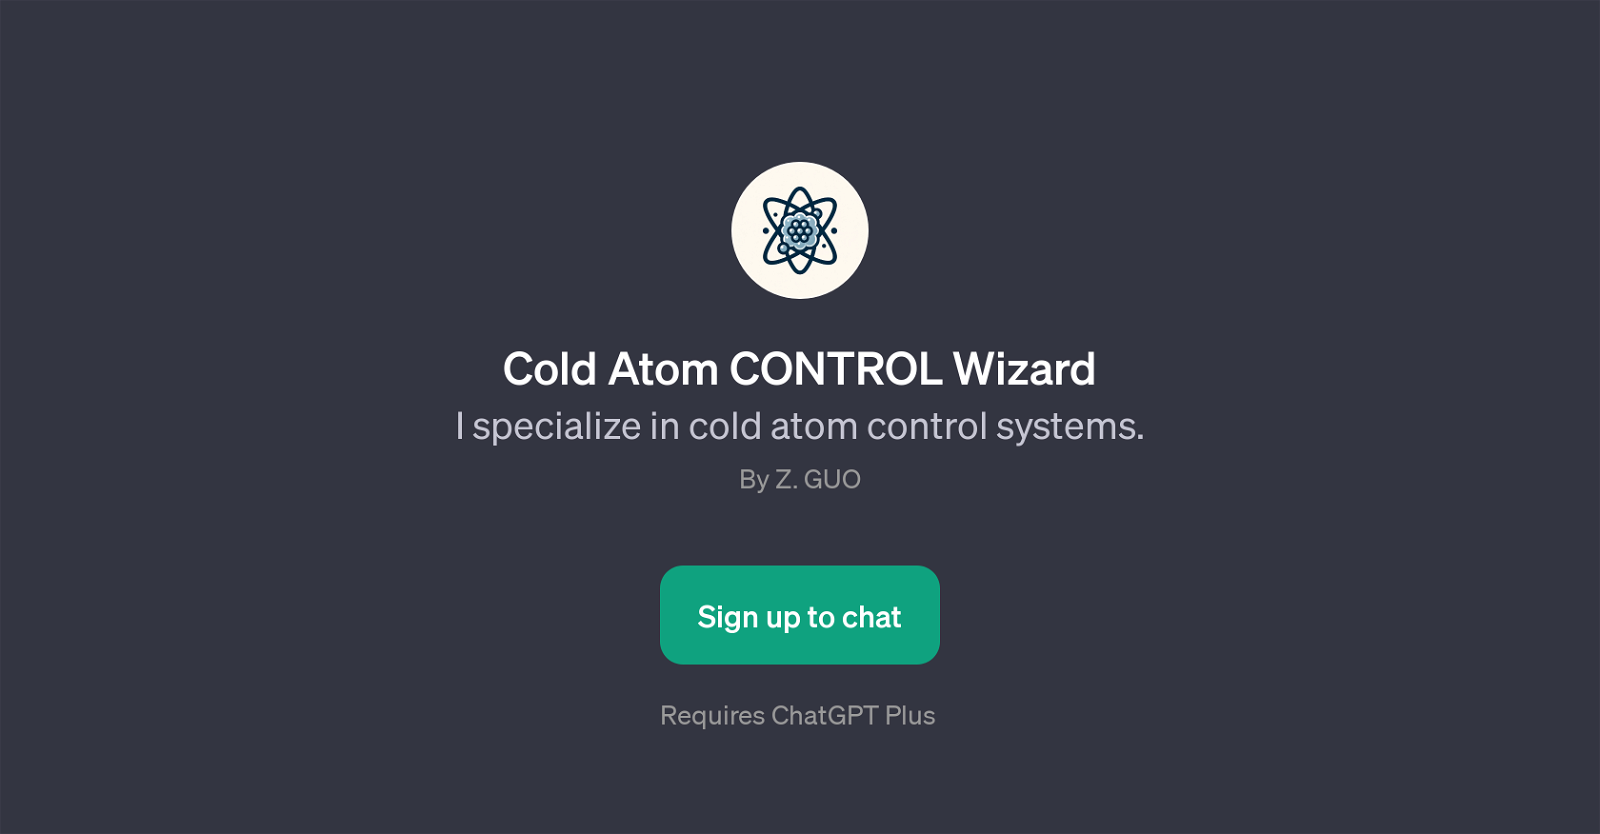 Cold Atom CONTROL Wizard website